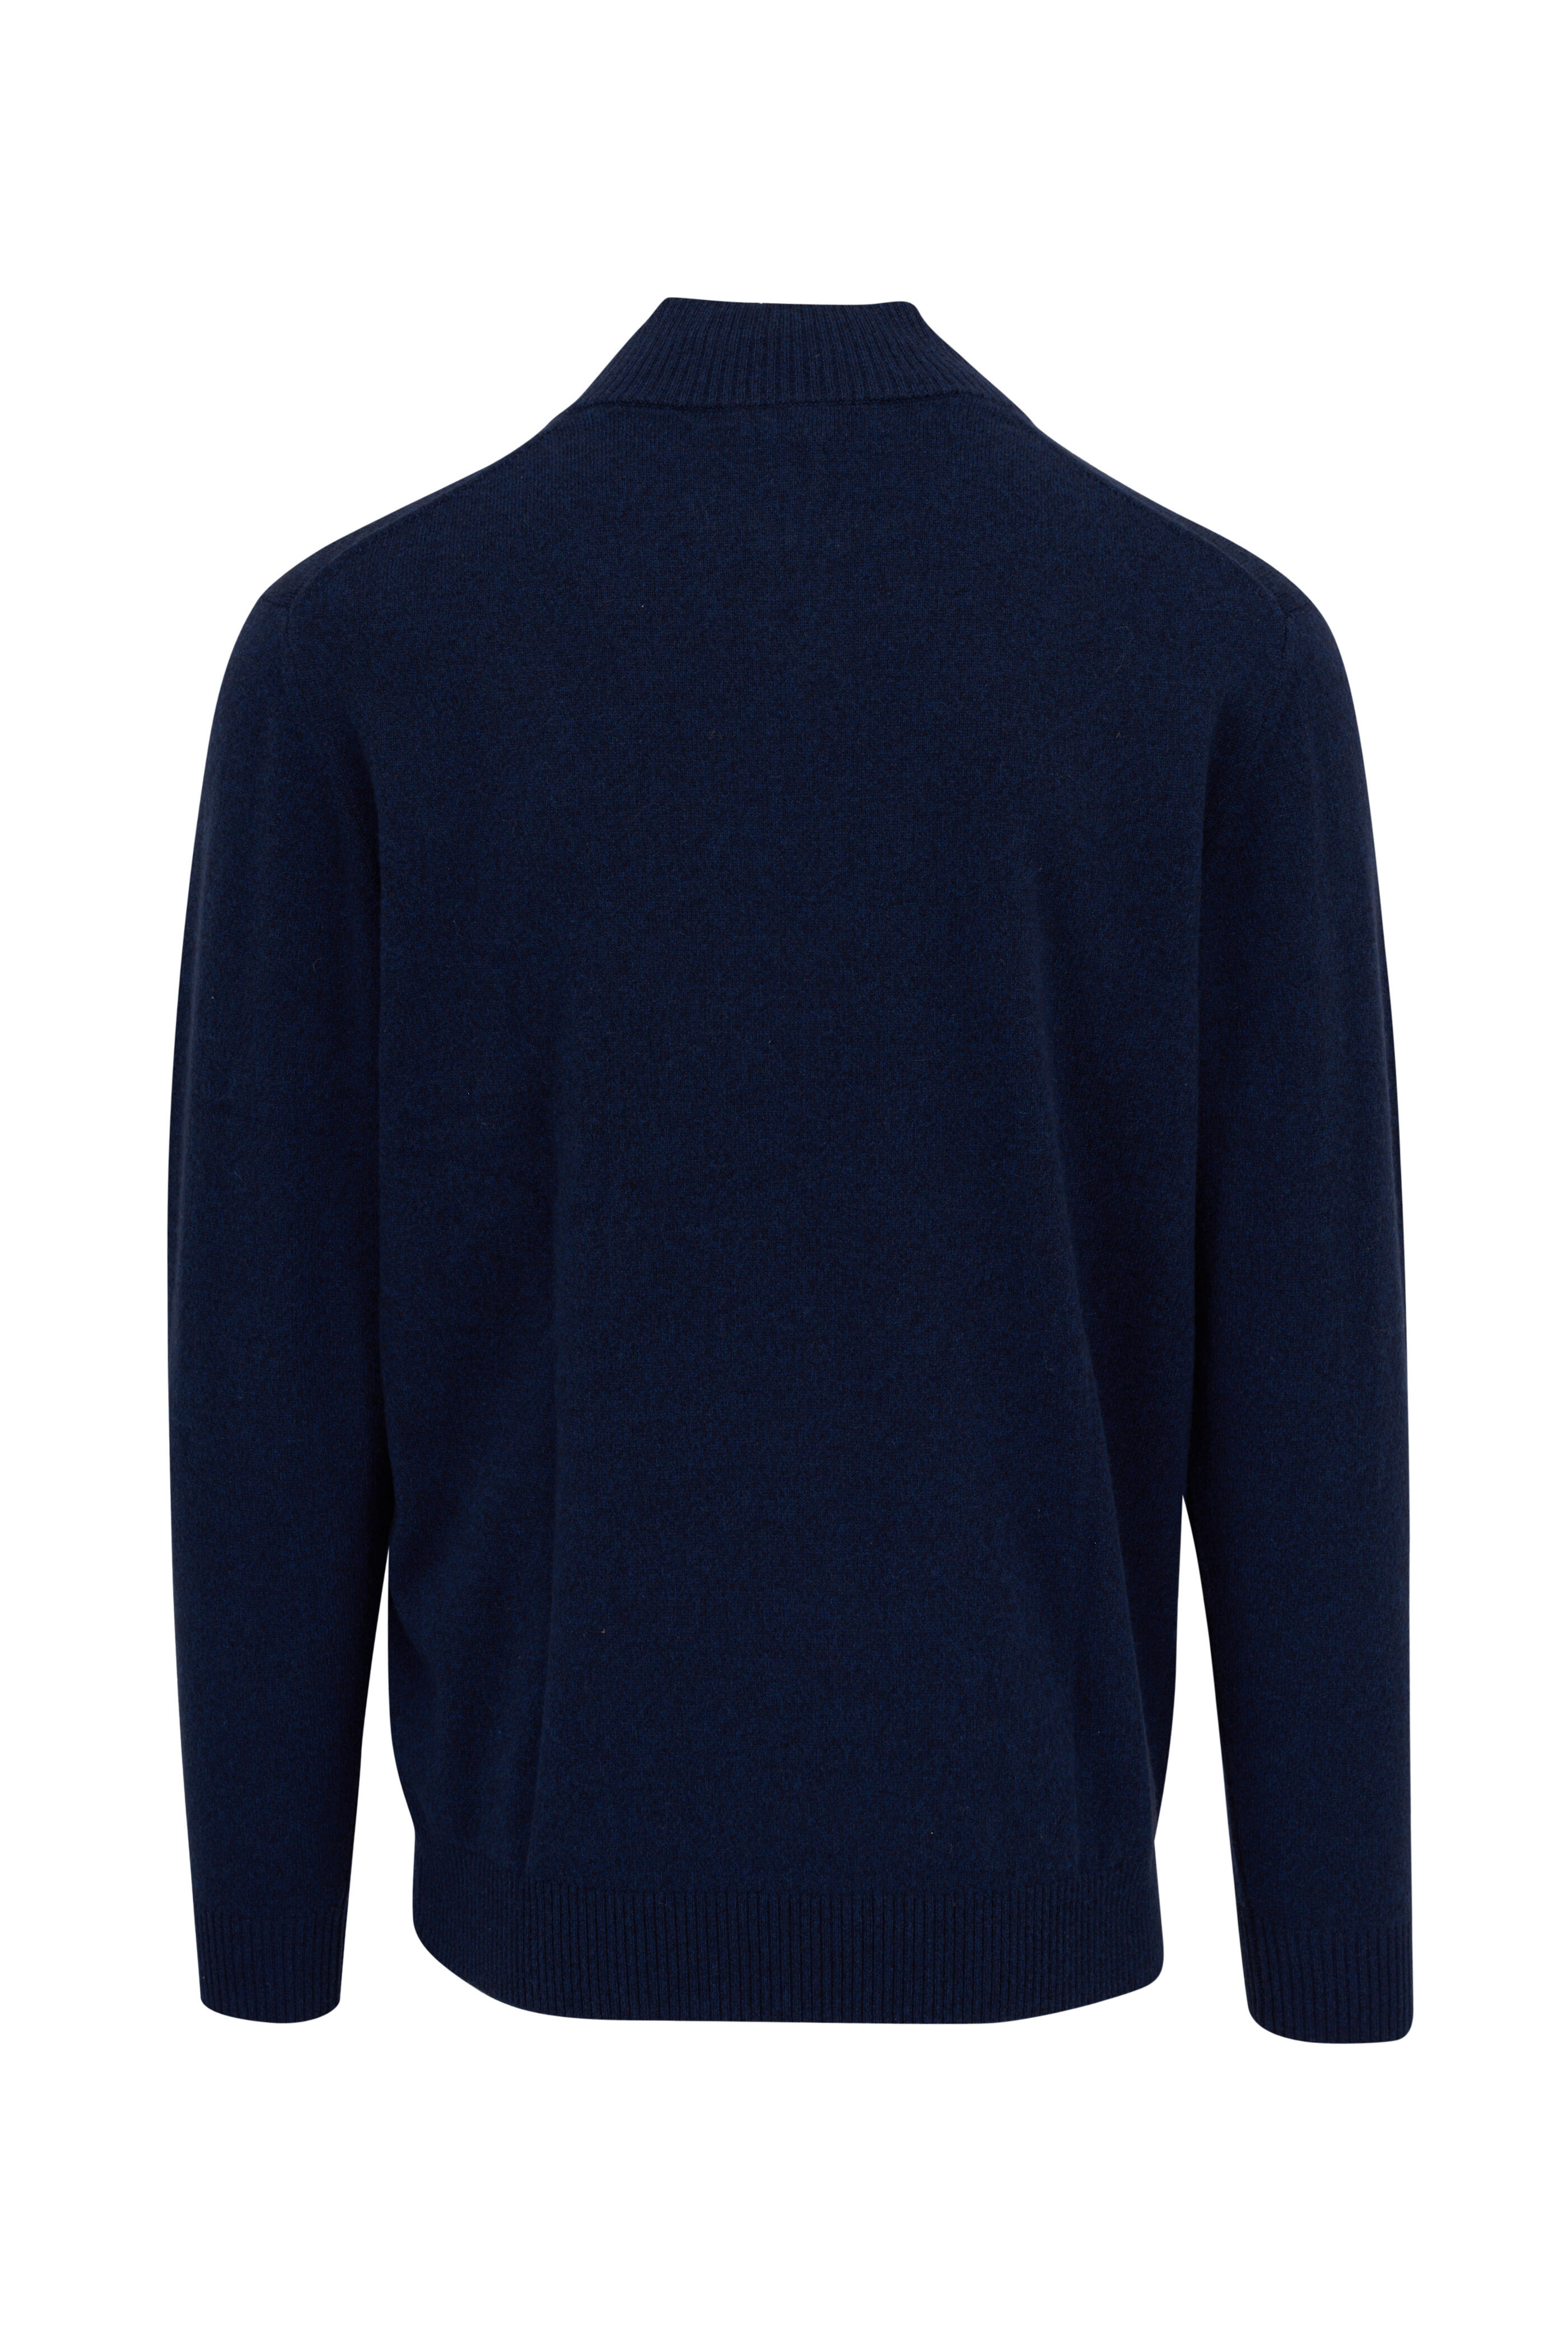 Kinross - Navy Suede Trim Quarter Zip Pullover | Mitchell Stores